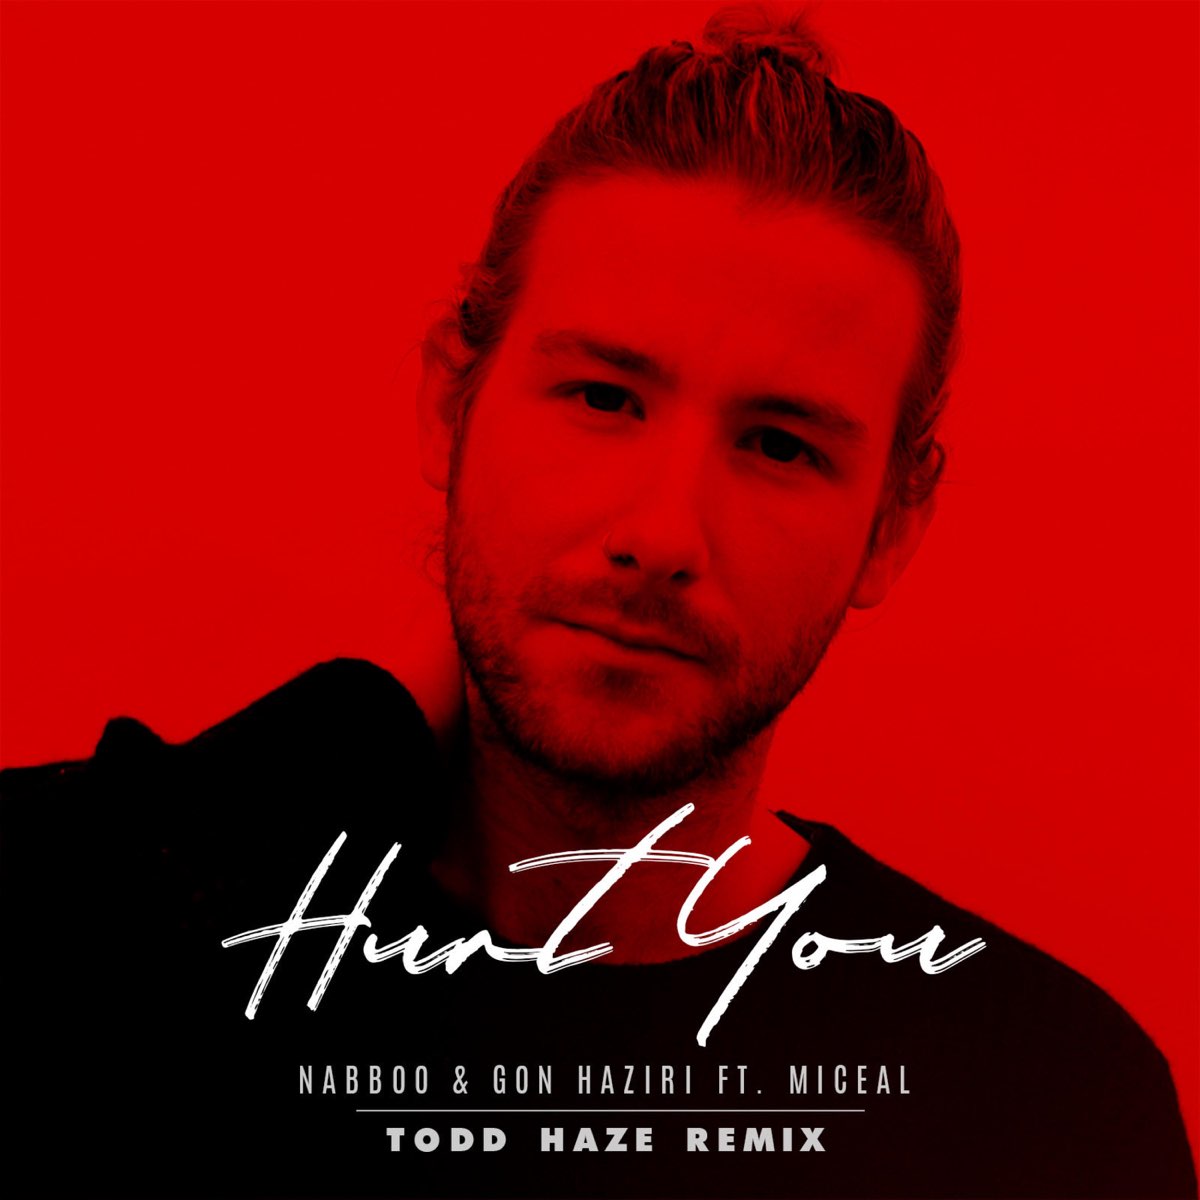 naBBoo & Gon Haziri ft. featuring Miceal & Todd Haze Hurt You (Todd Haze Remix) cover artwork